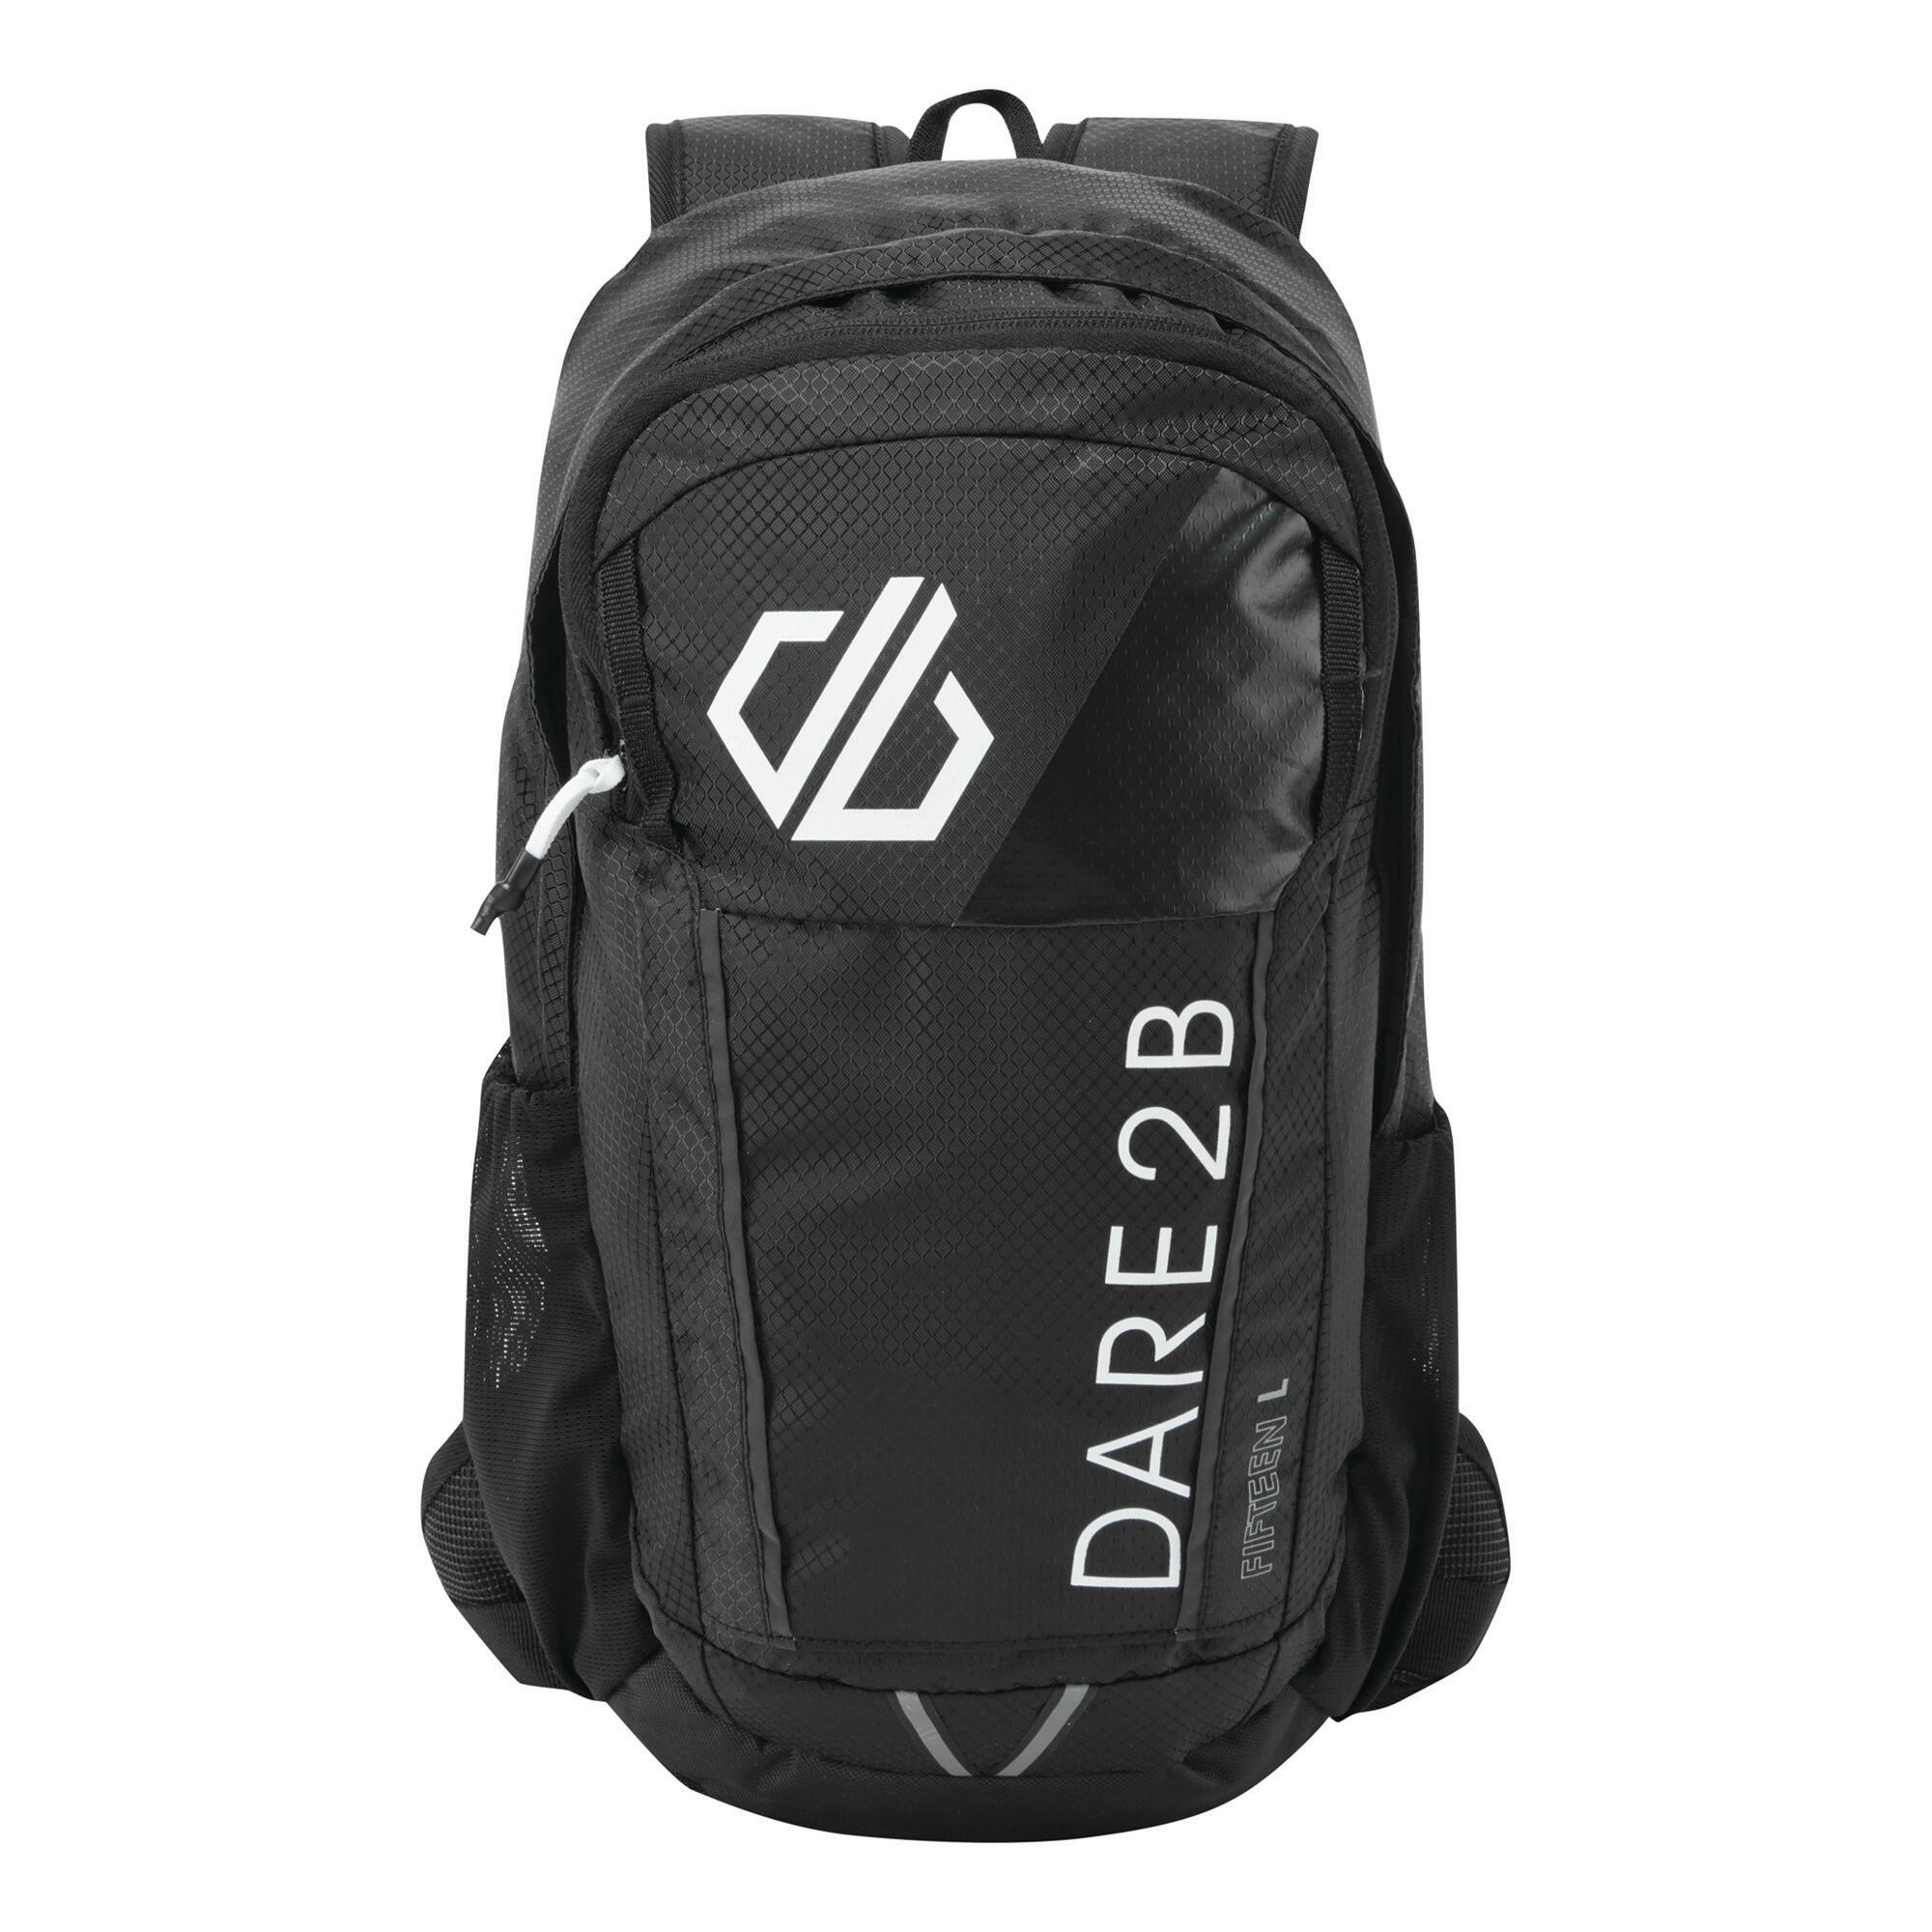 DARE 2B Vite Air Adults' Hiking 15 Litre Backpack - Black/White